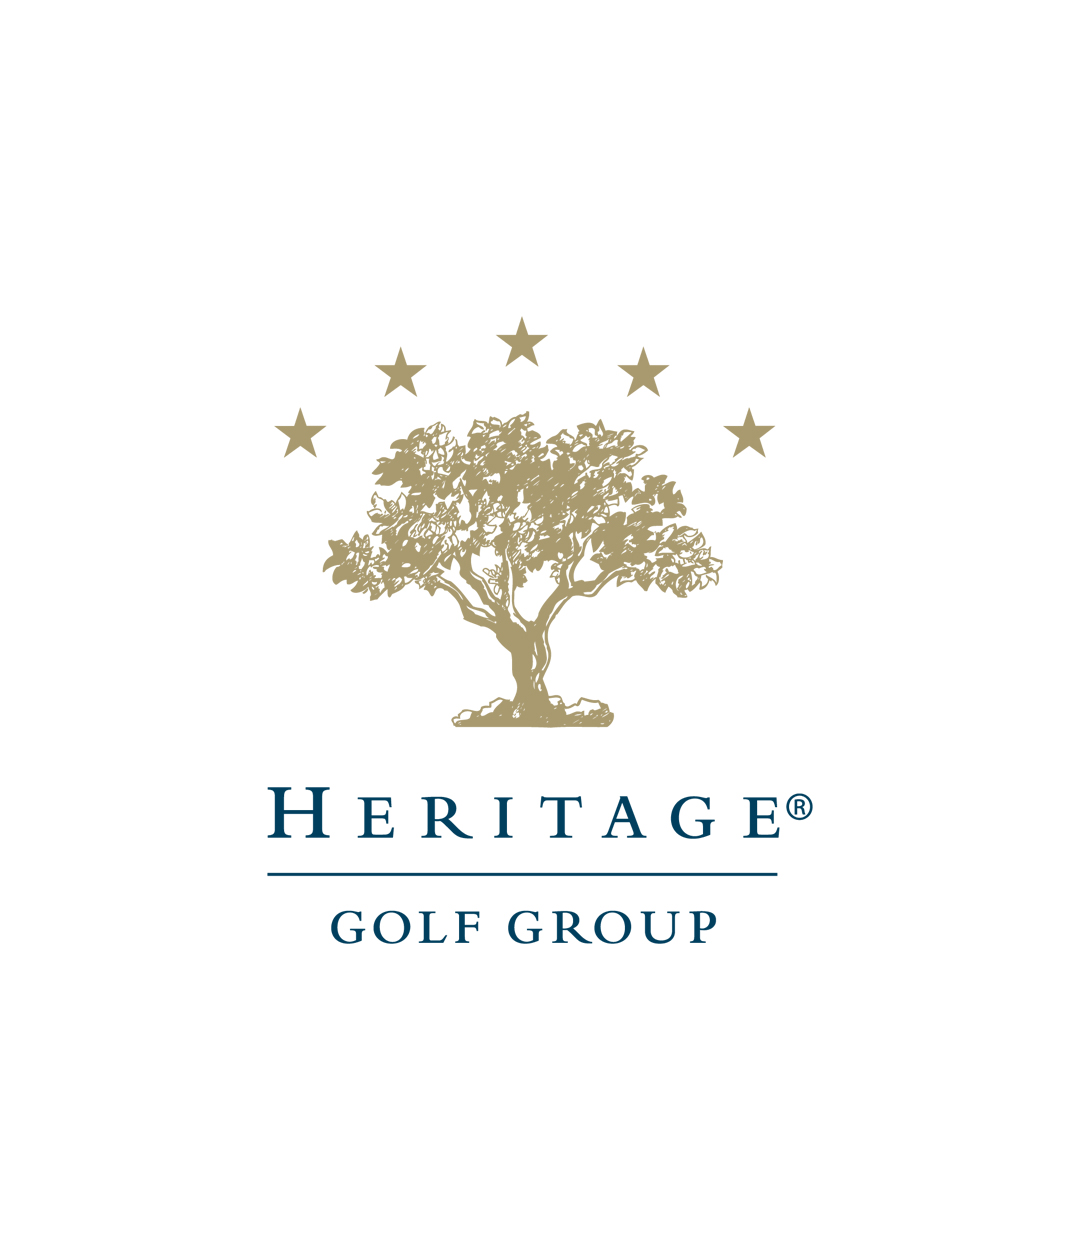 Heritage Golf Group